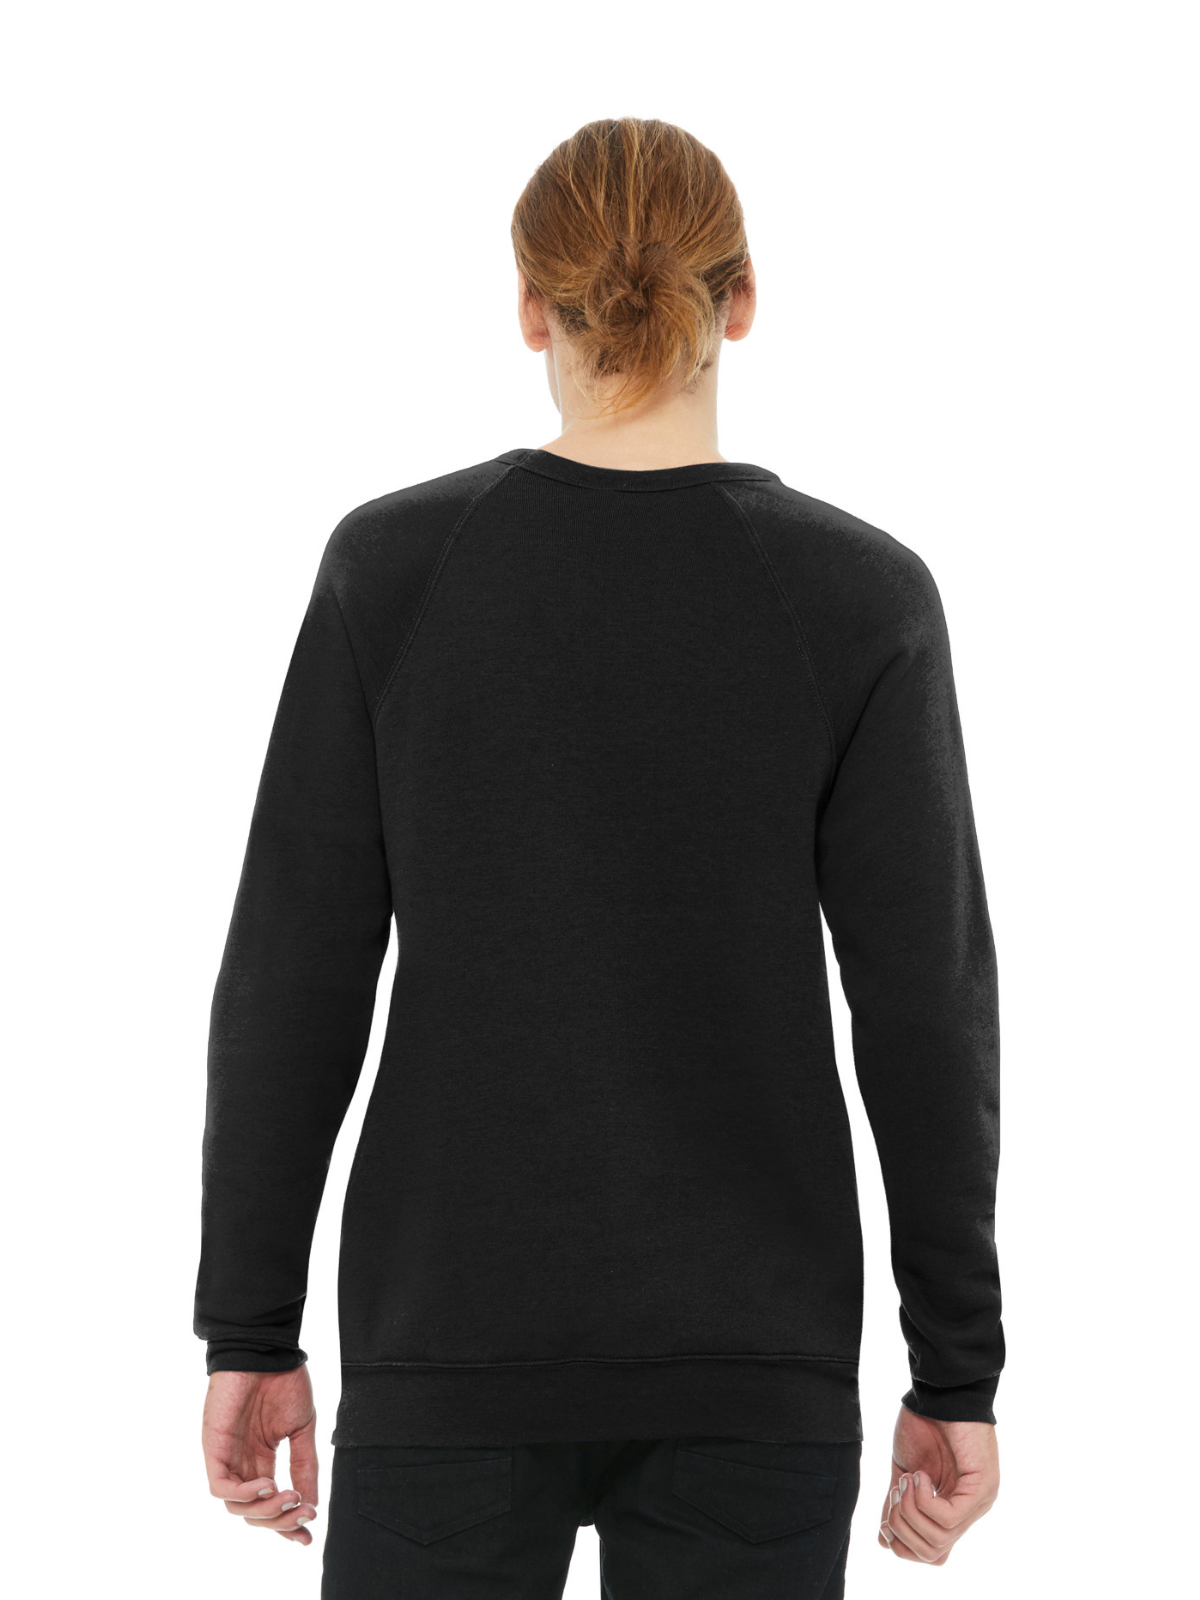 Unisex Raglan Sweatshirt - BC3901 - Black